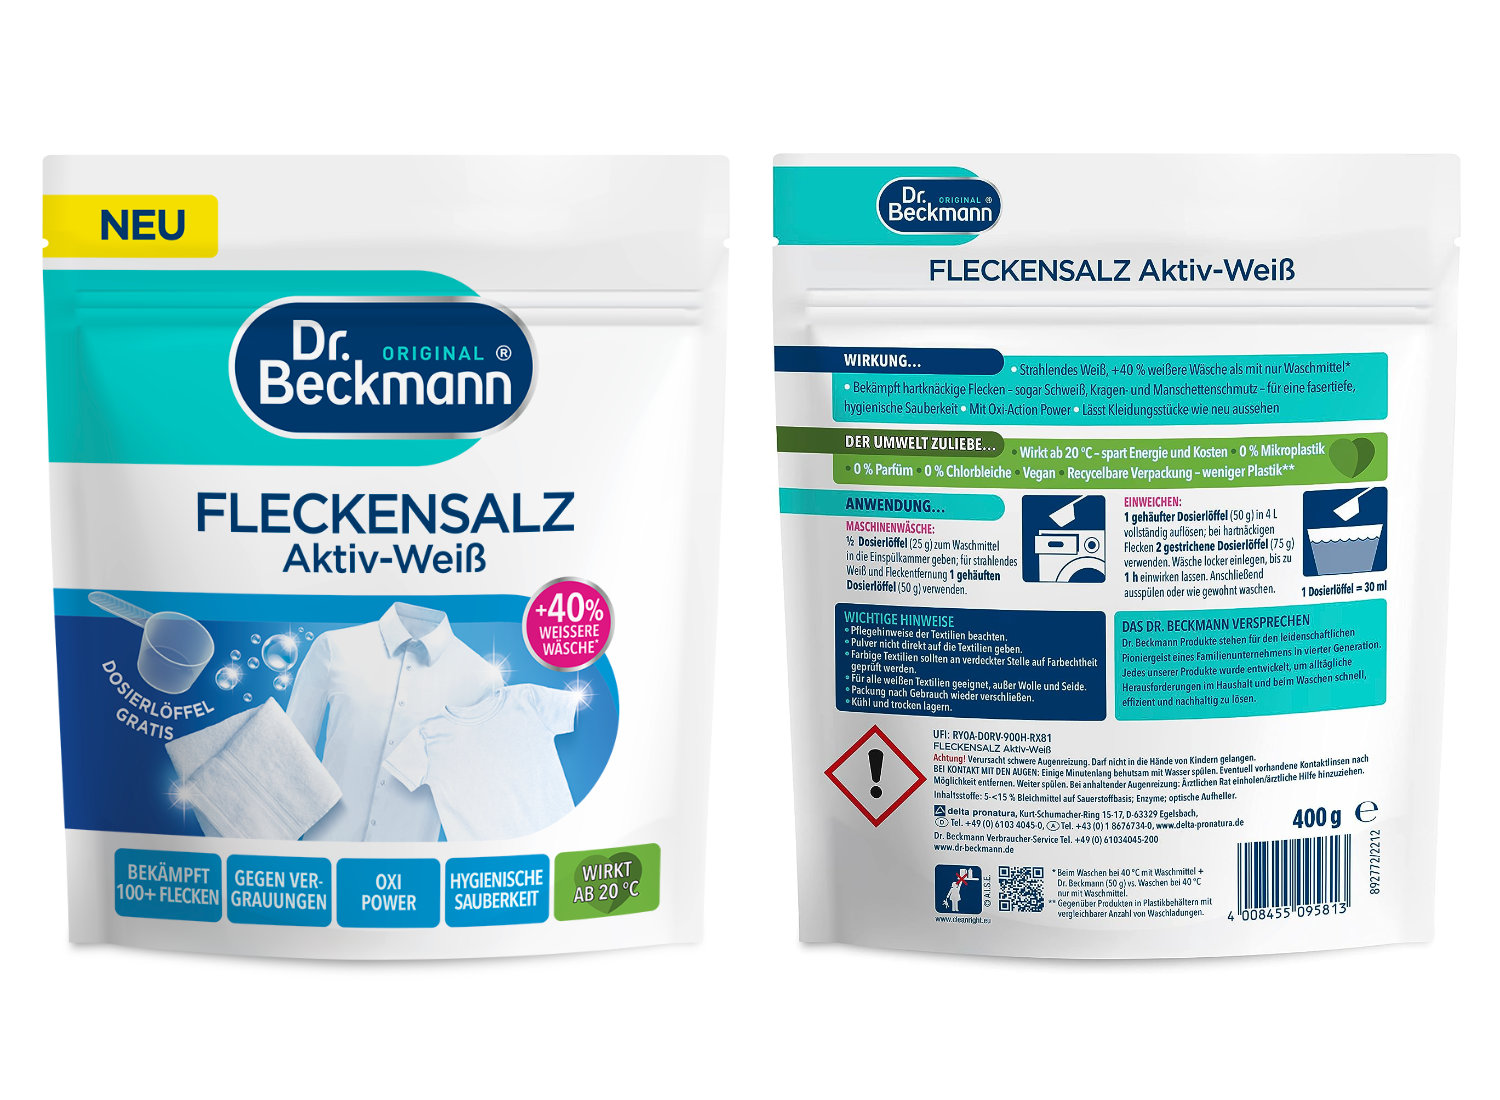 Dr. Beckmann Fleckensalz Aktiv-Weiß Verpackung, Quelle: Dr. Beckmann, Amazon